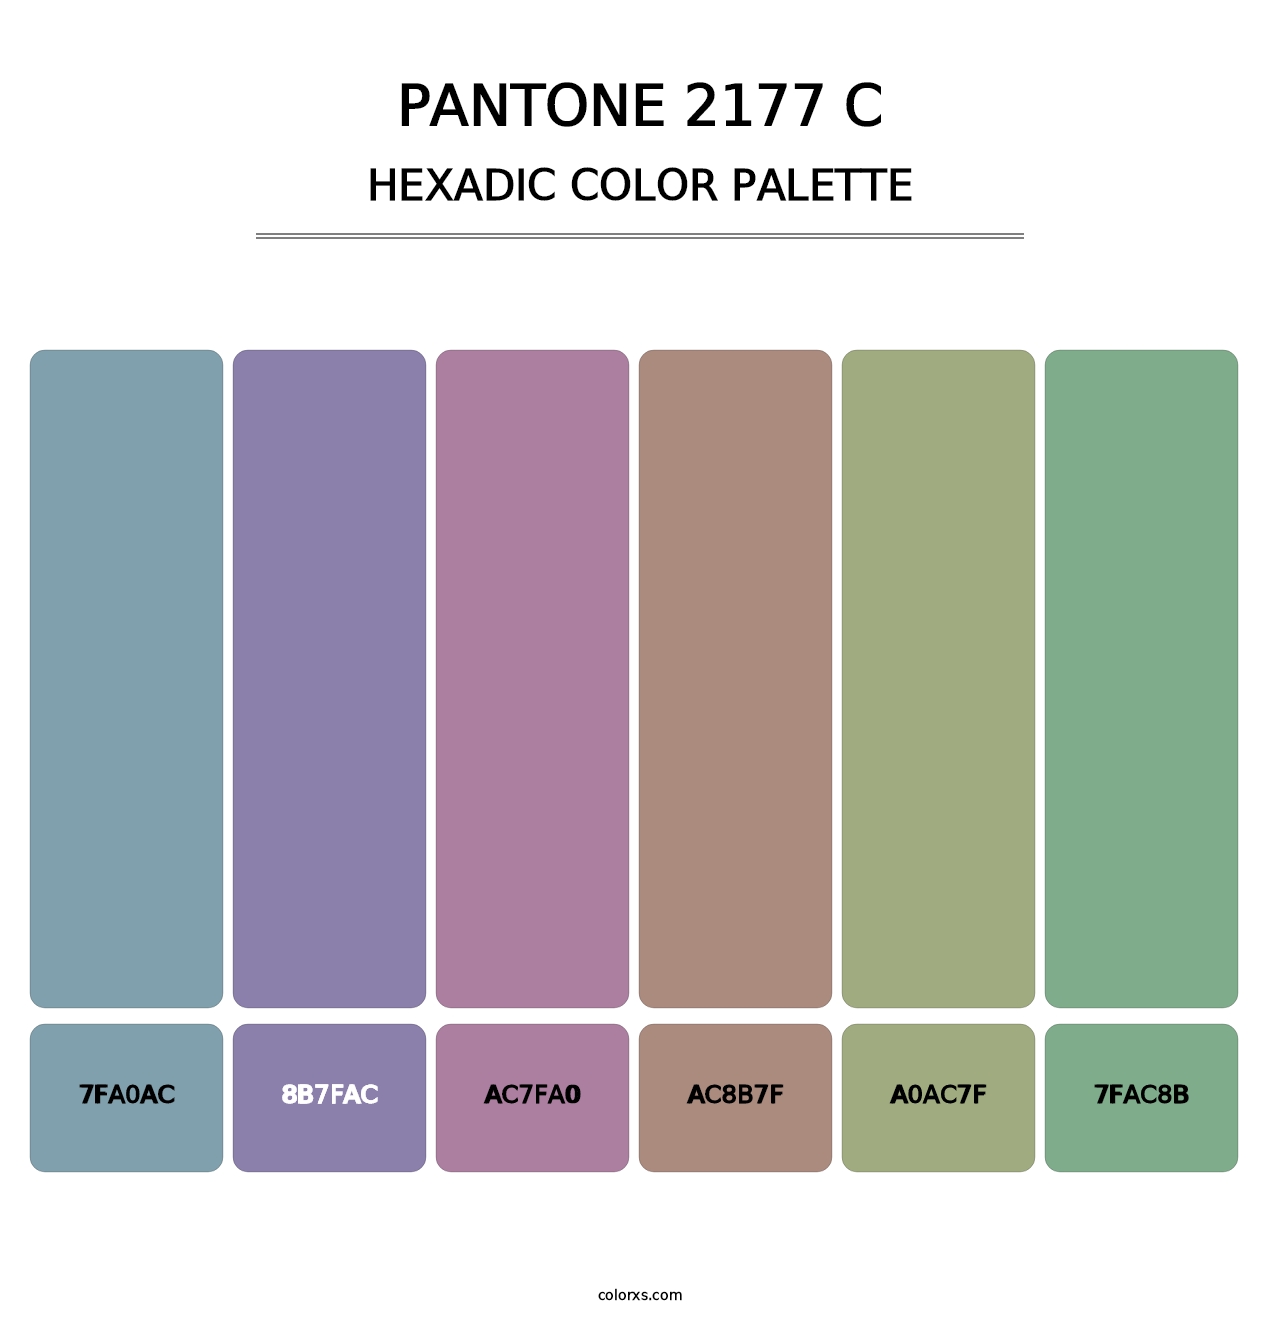 PANTONE 2177 C - Hexadic Color Palette